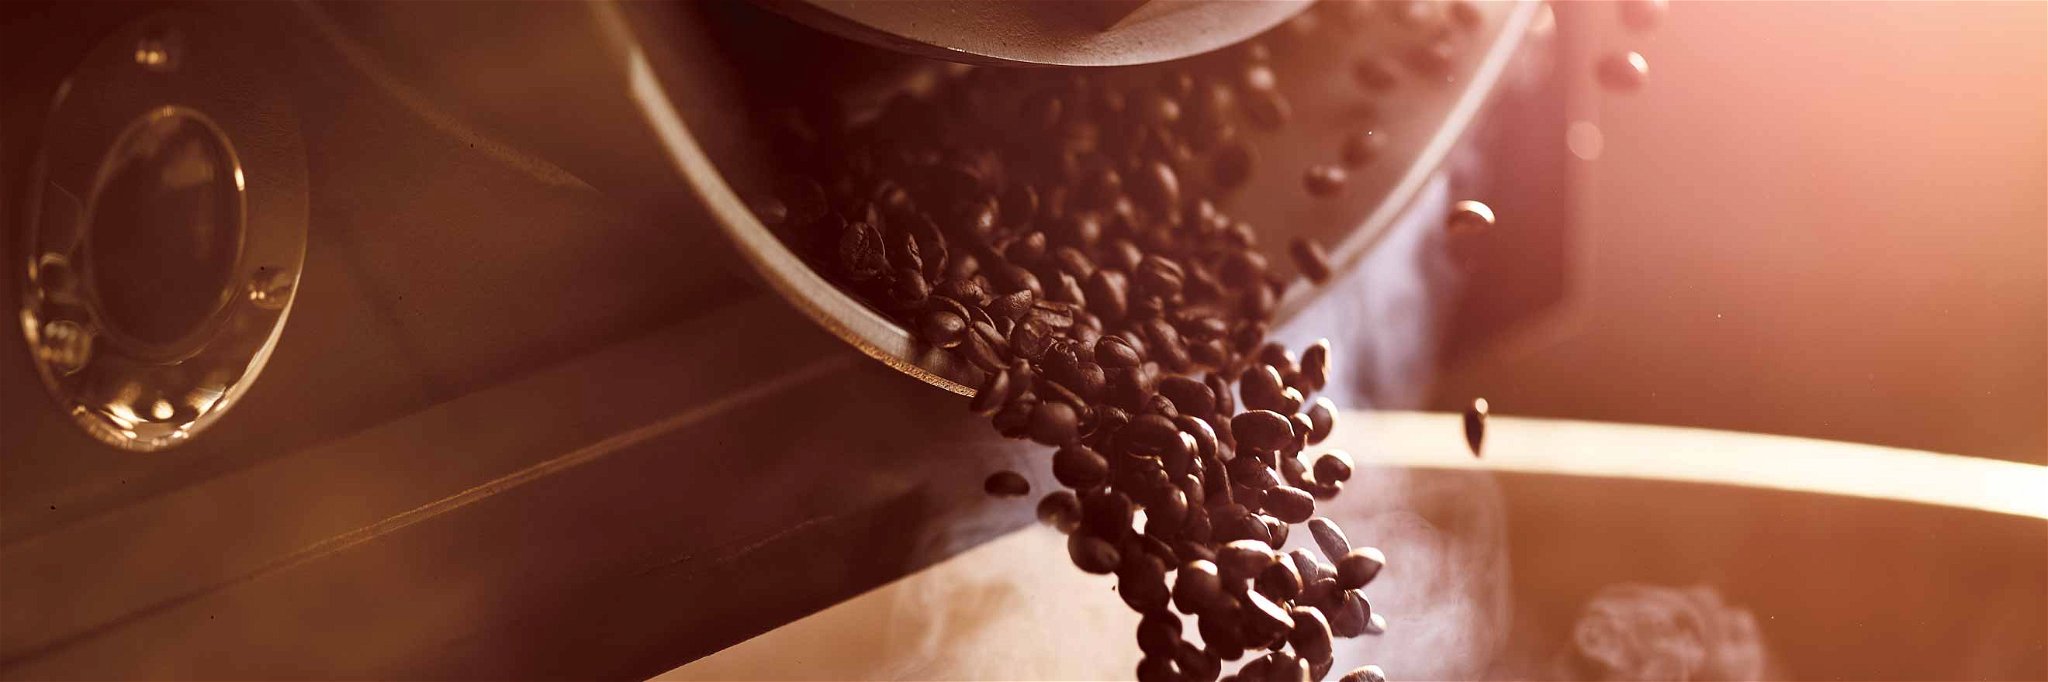 Coffee provides a livelihood for 100 million people worldwide.